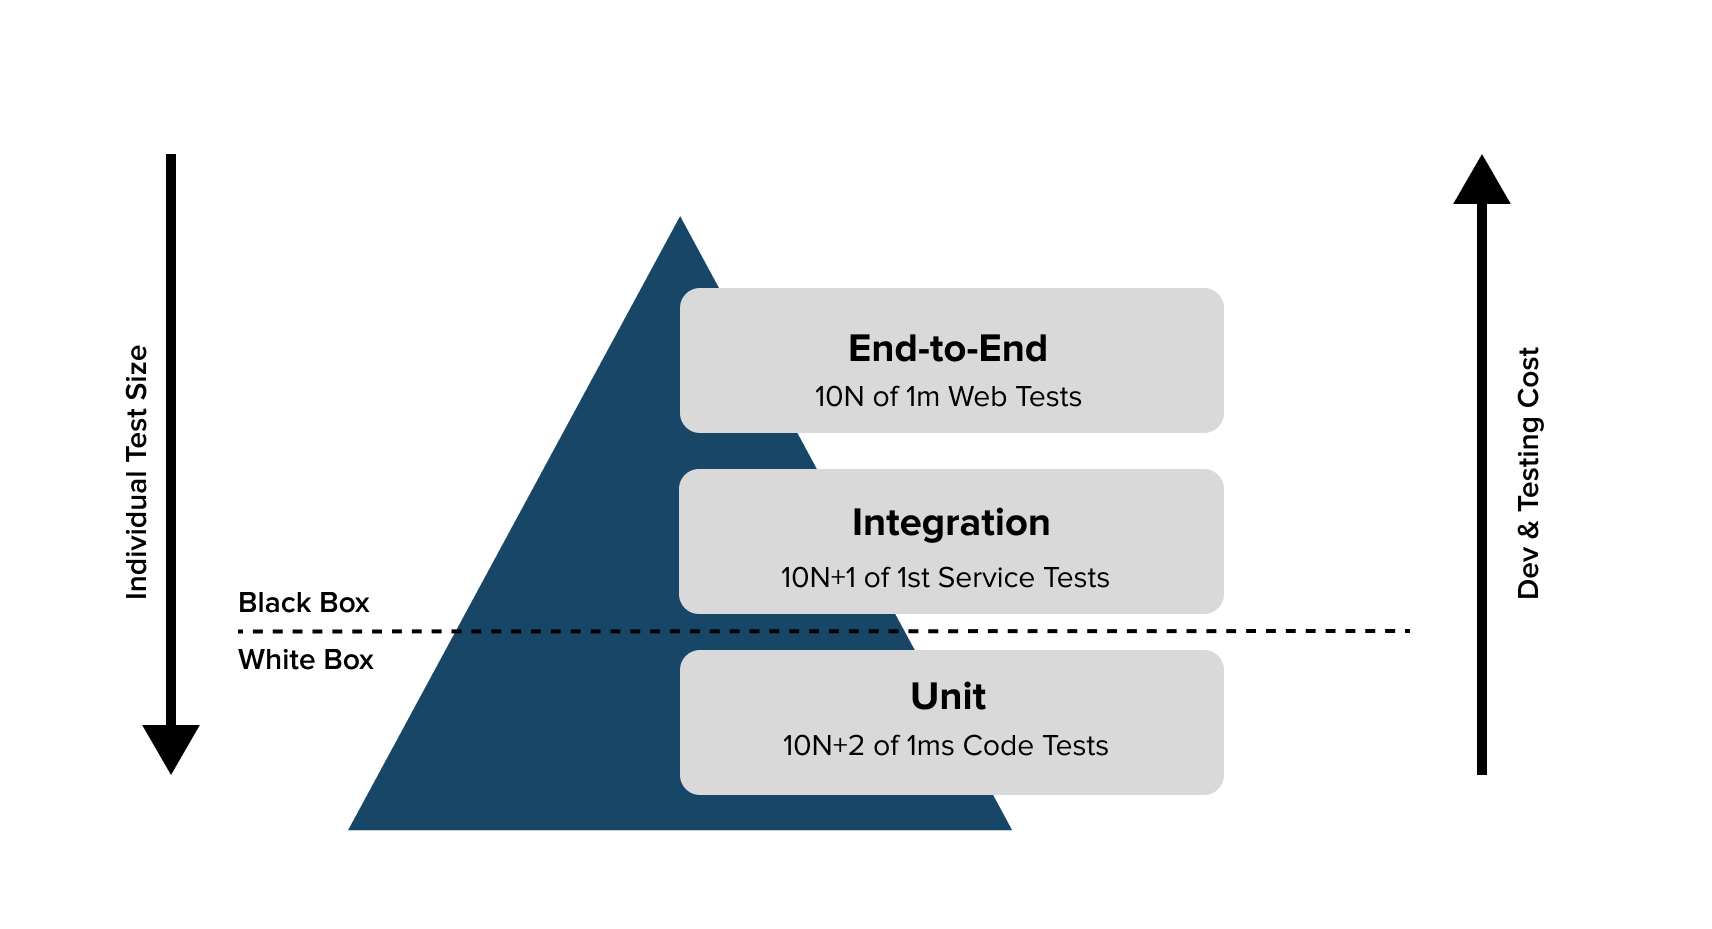 agile testing pyramid streamlines the development